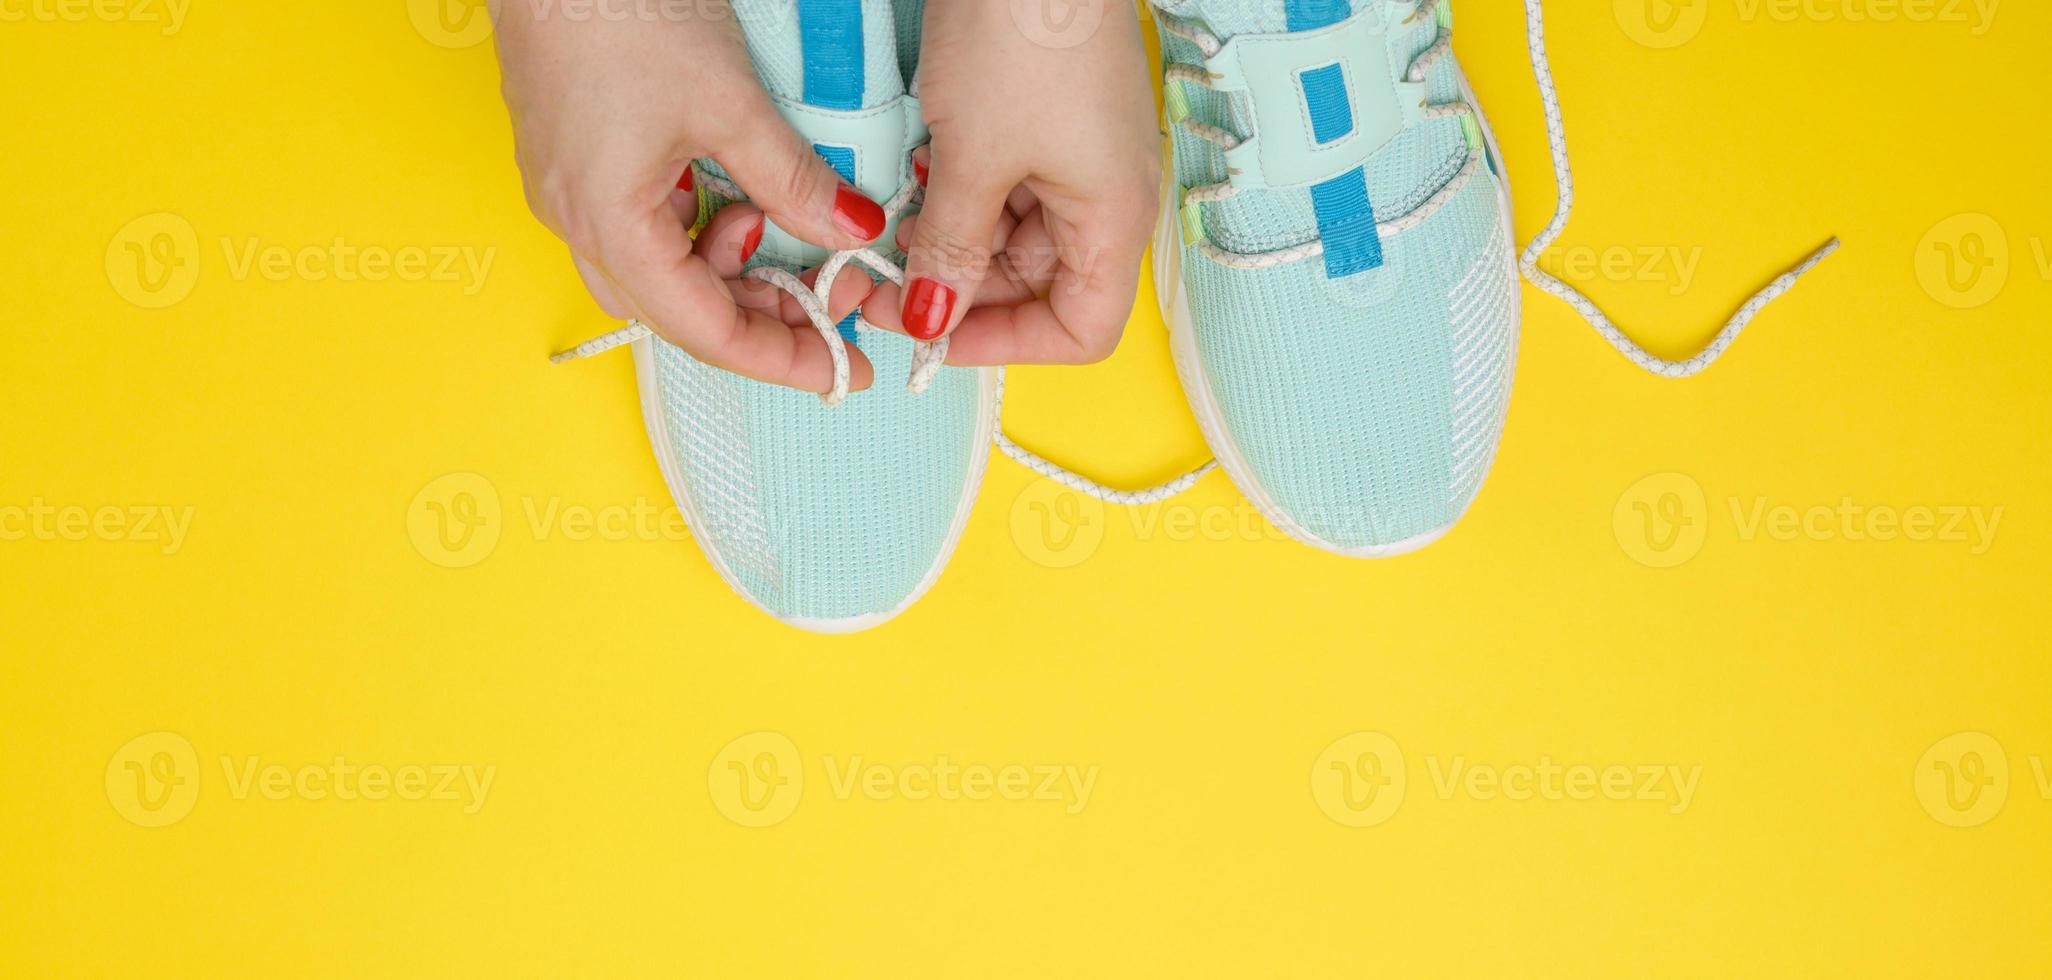 två kvinna händer kvitt skosnören på blå textil- sneakers, topp se foto